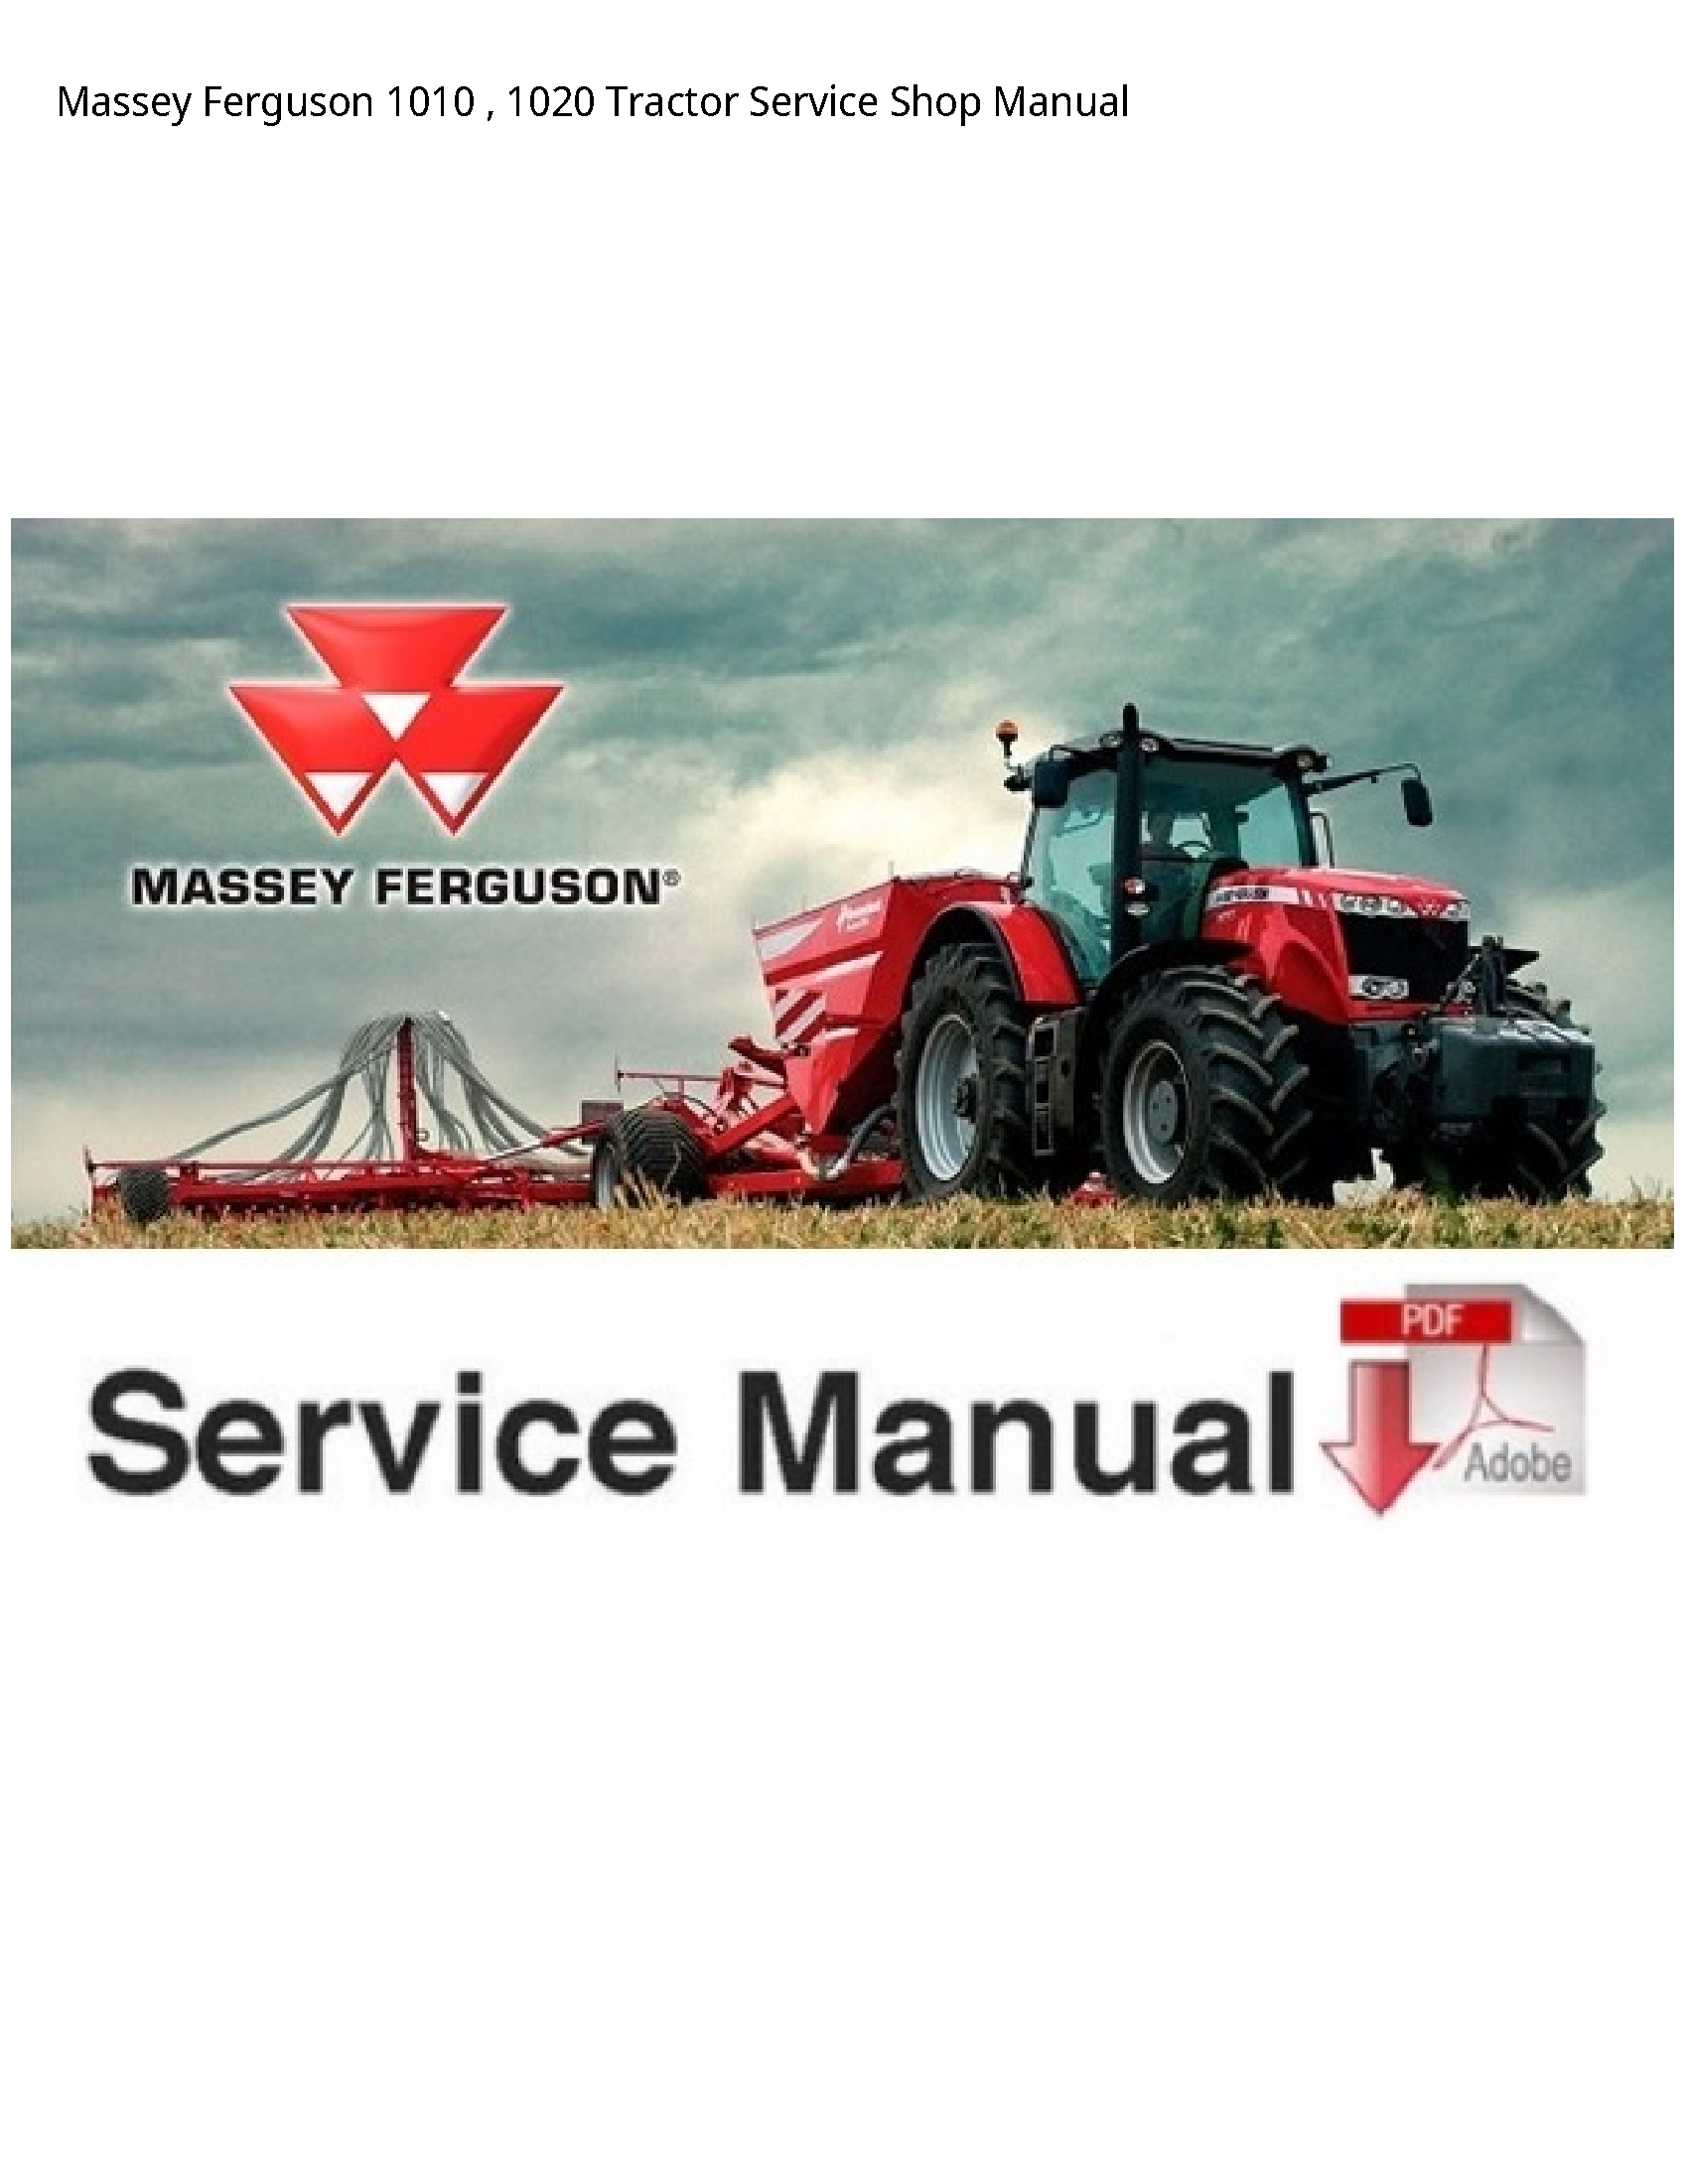 Massey Ferguson 1010 Tractor Service Shop manual